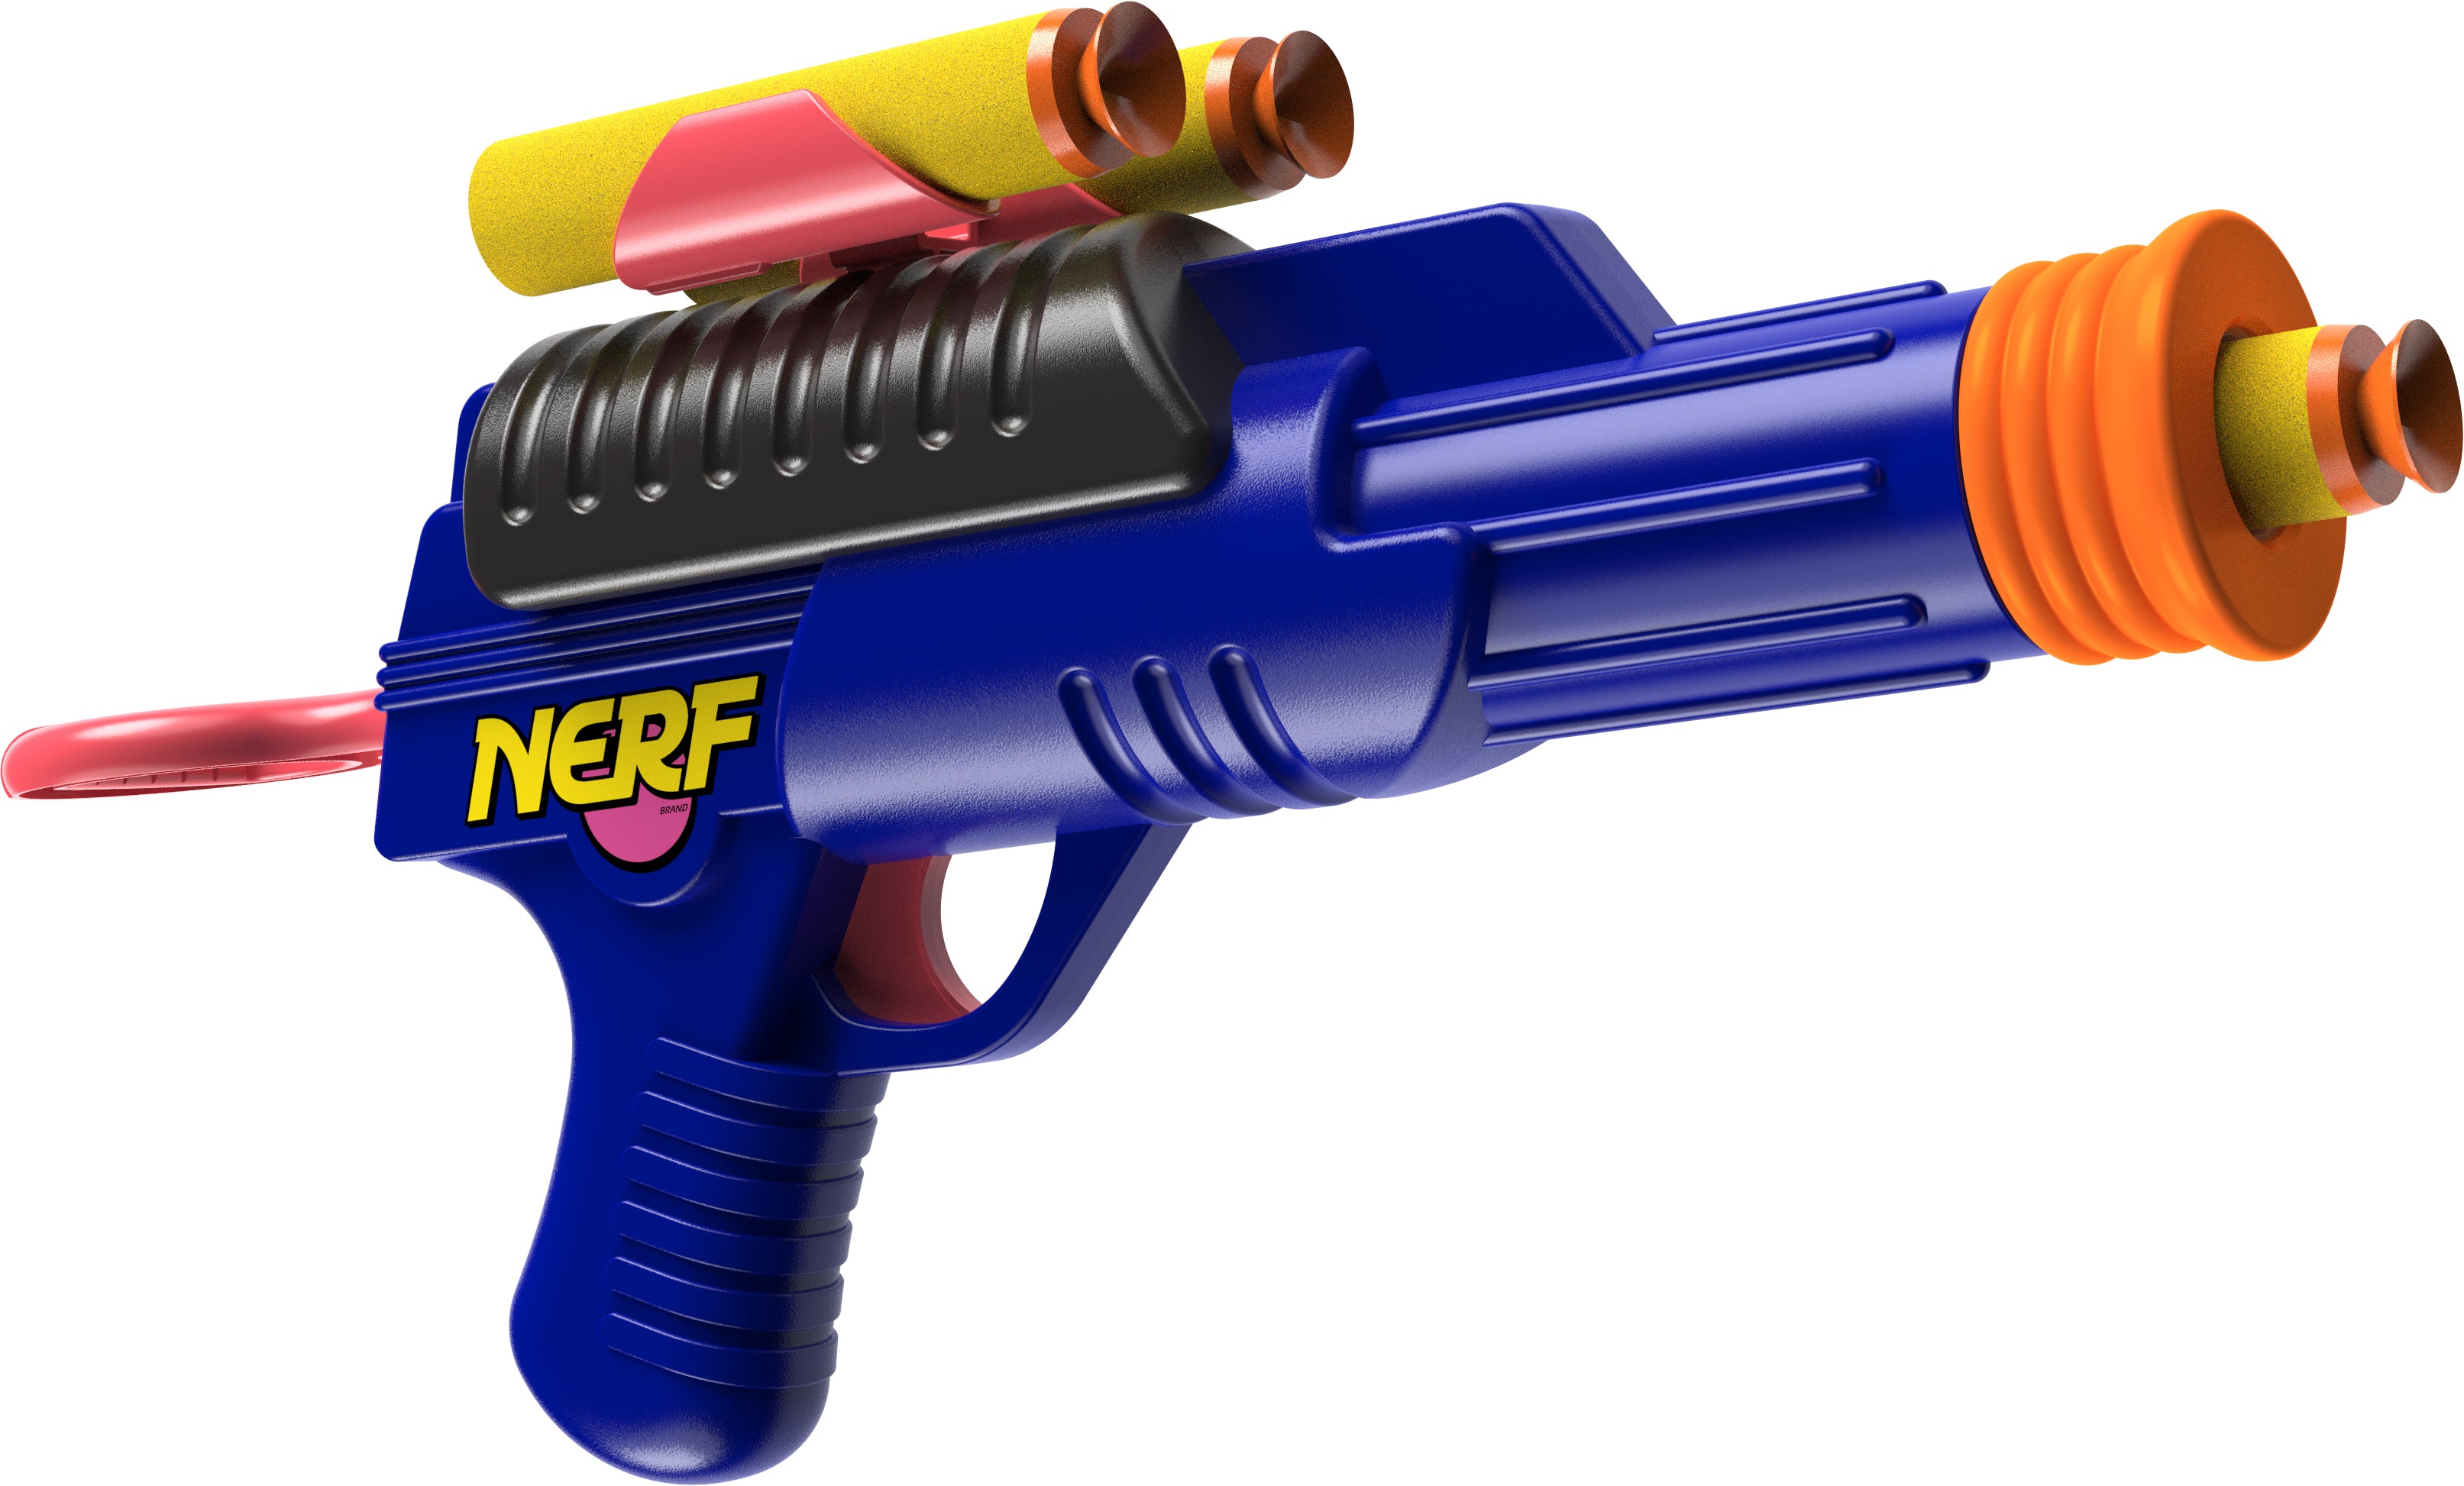 dezine new mega nerf gun